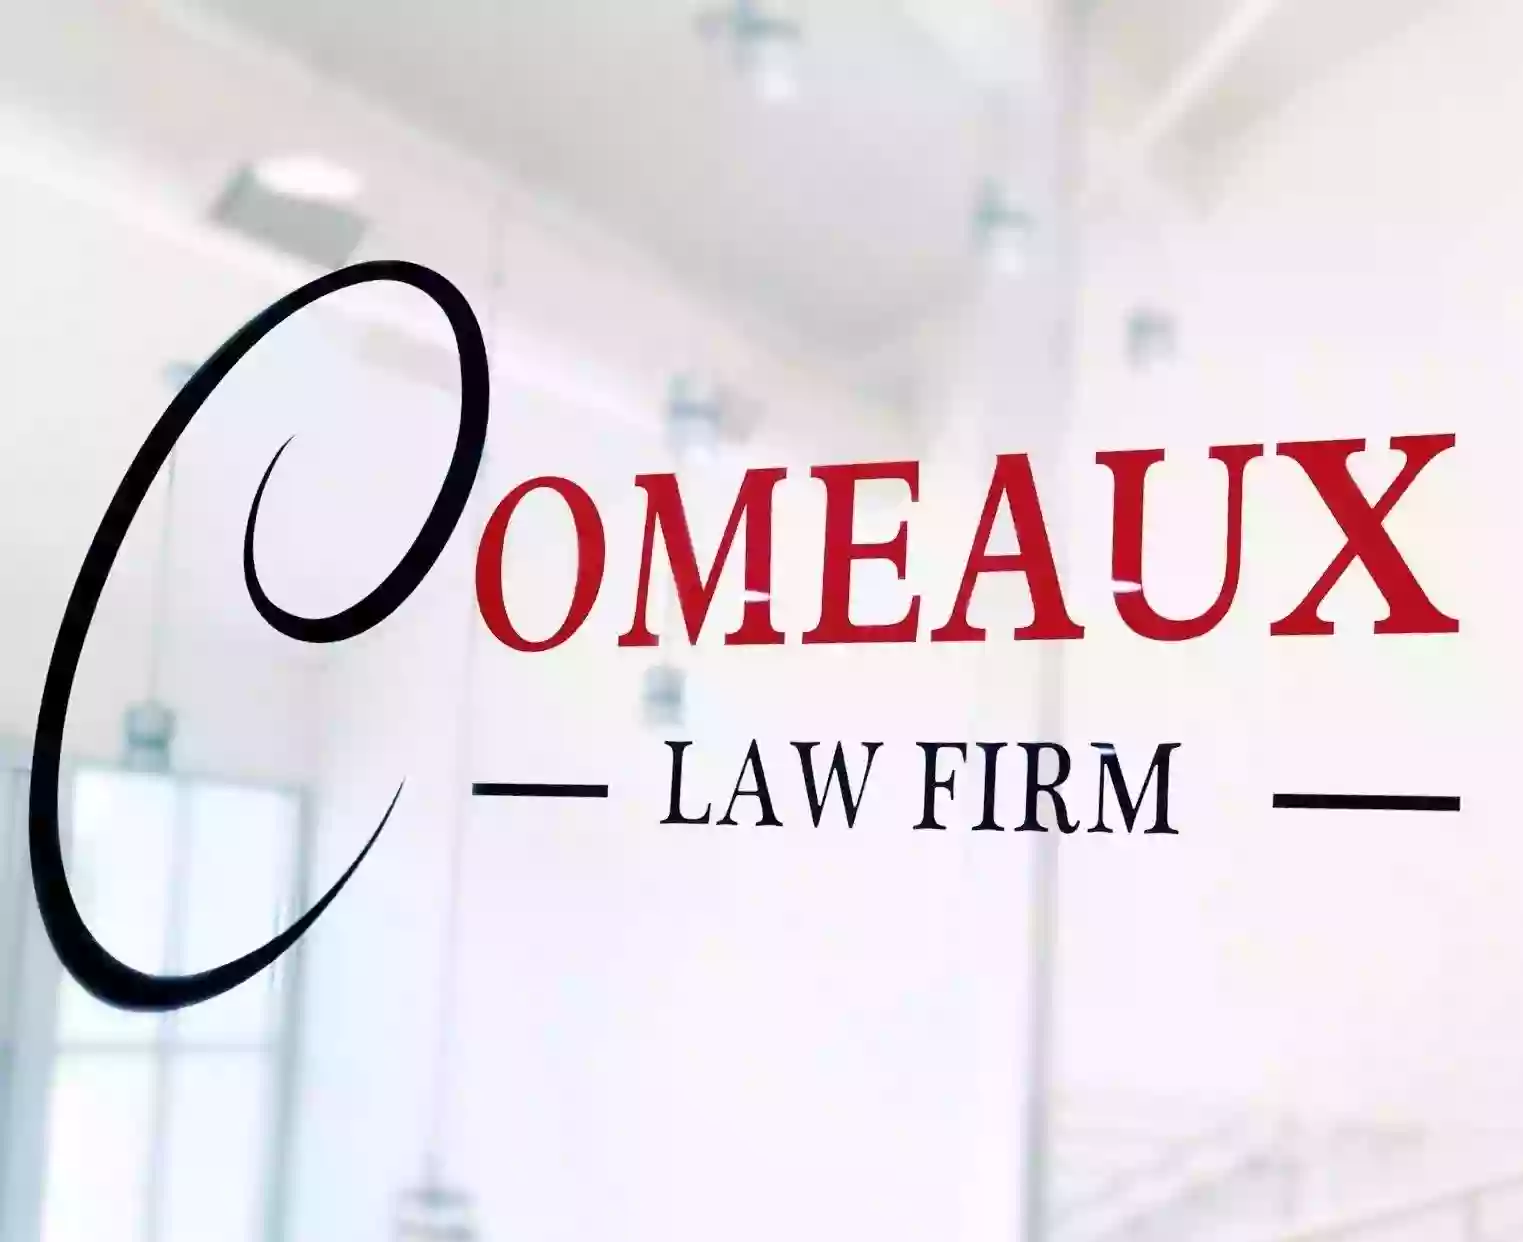 Comeaux Law Firm